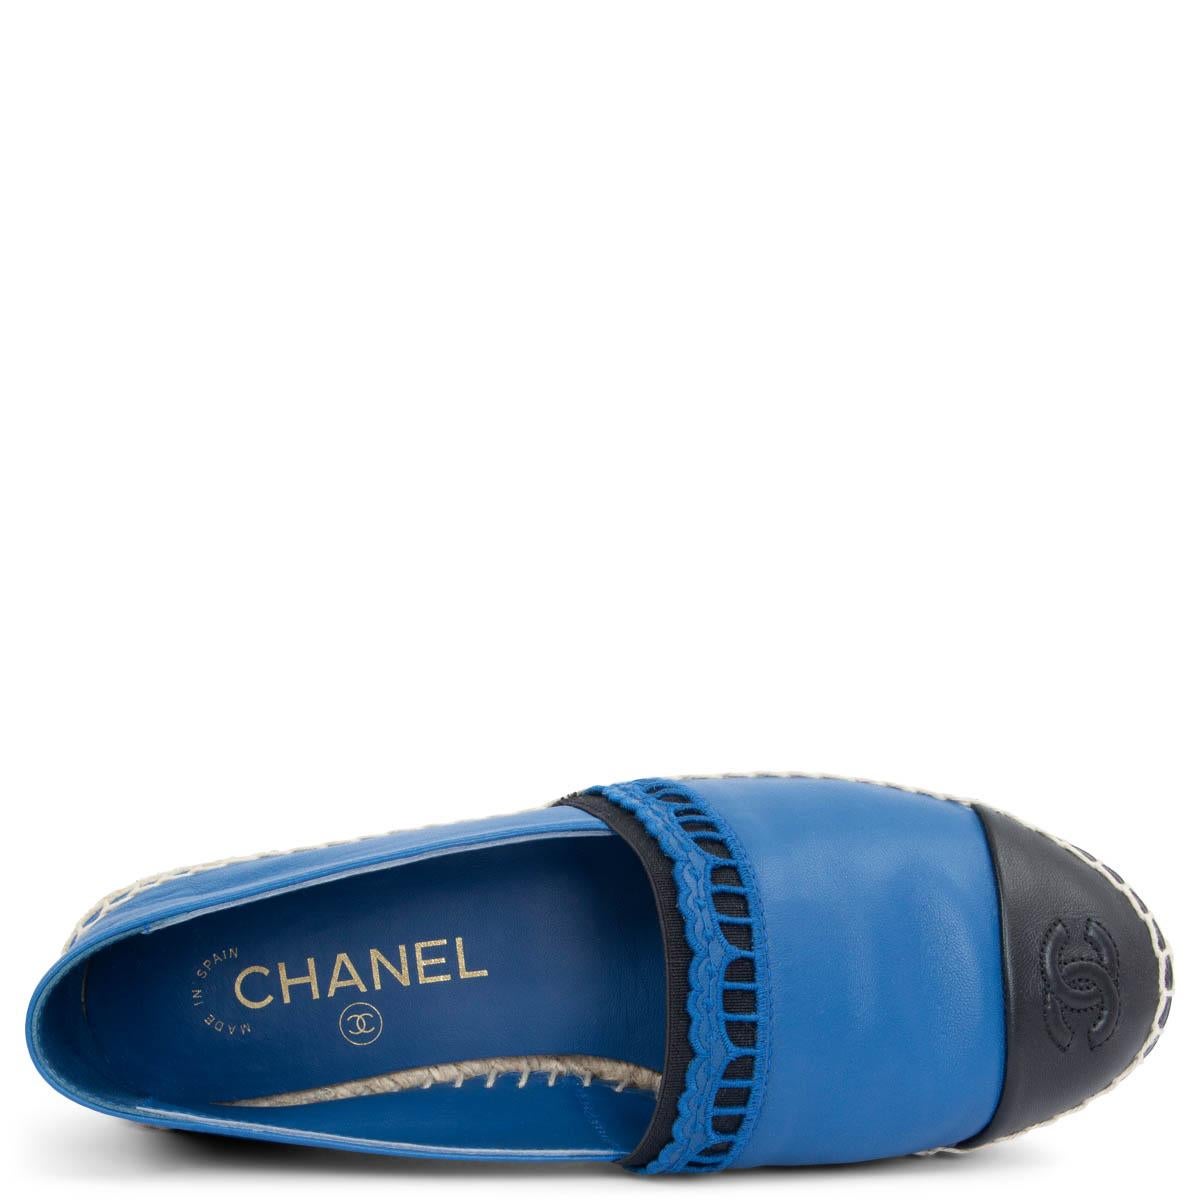 CHANEL blue & black leather Espadrilles Flats Shoes 37 For Sale 3